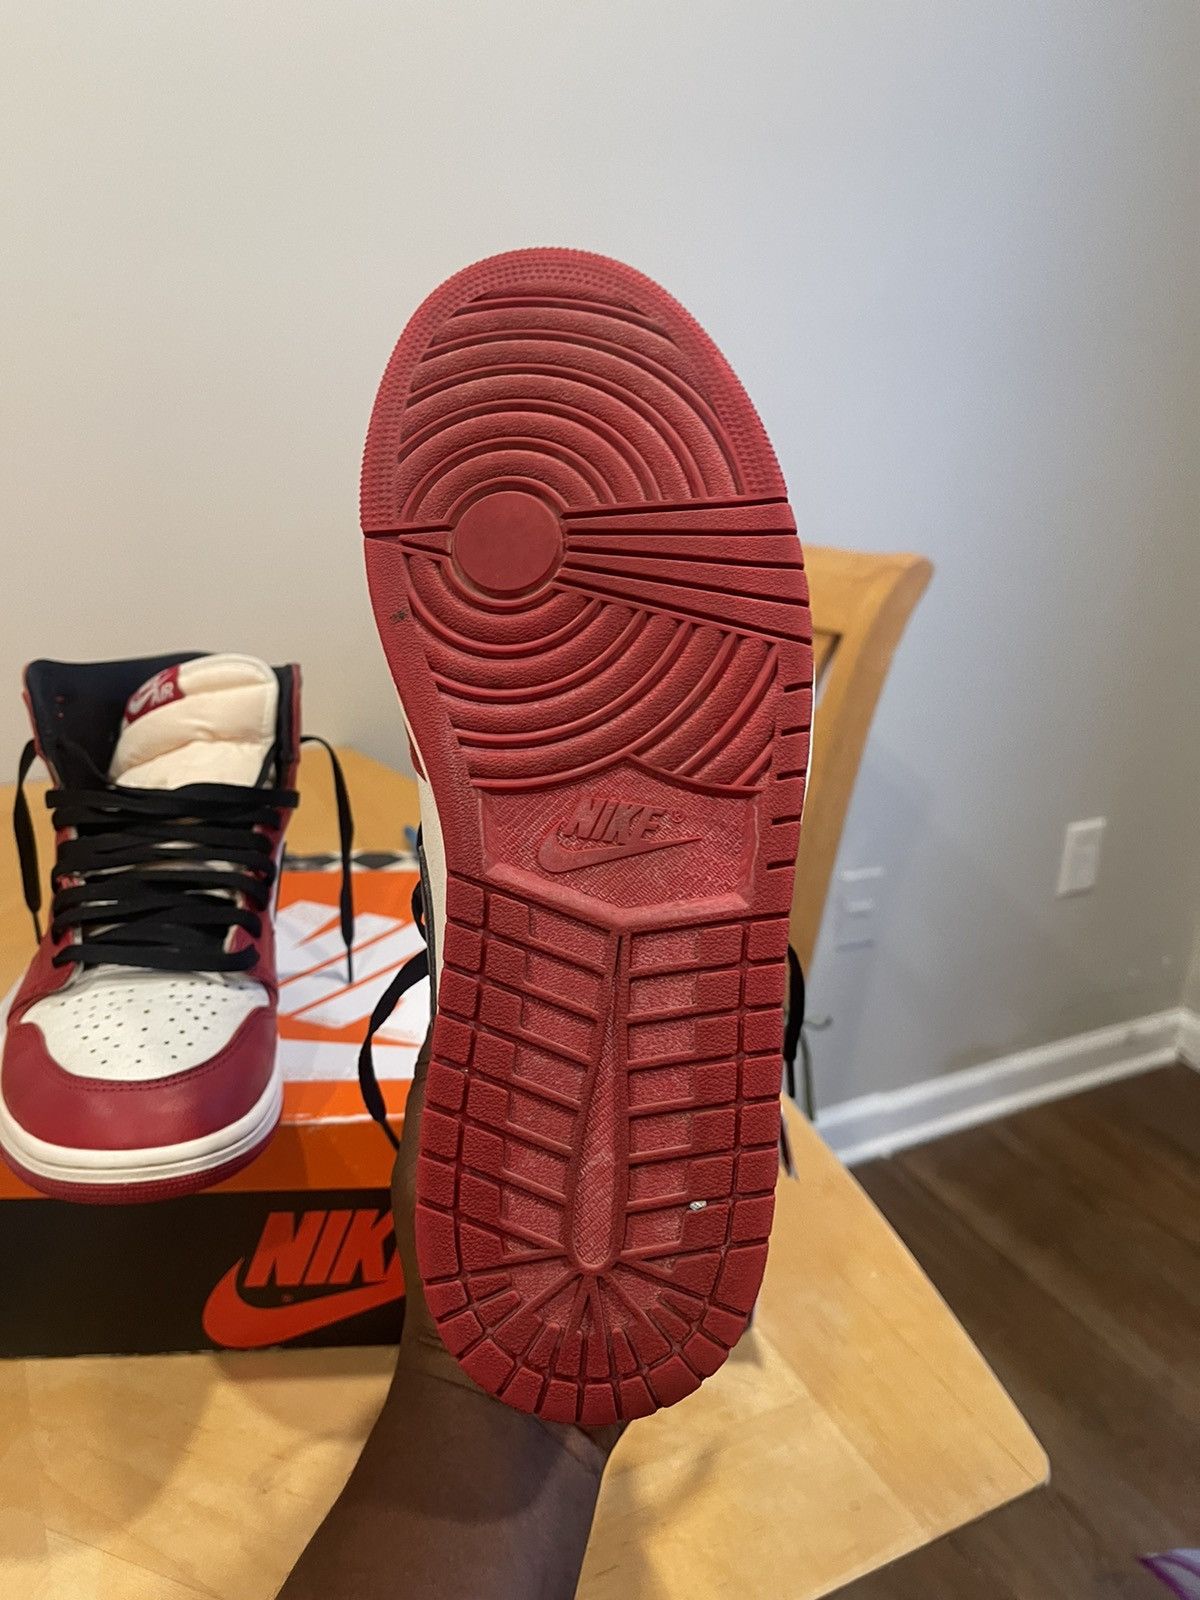 Nike Air Jordan 1 - Chicago “Lost & Found” Size US 10.5 / EU 43-44 - 15 Thumbnail